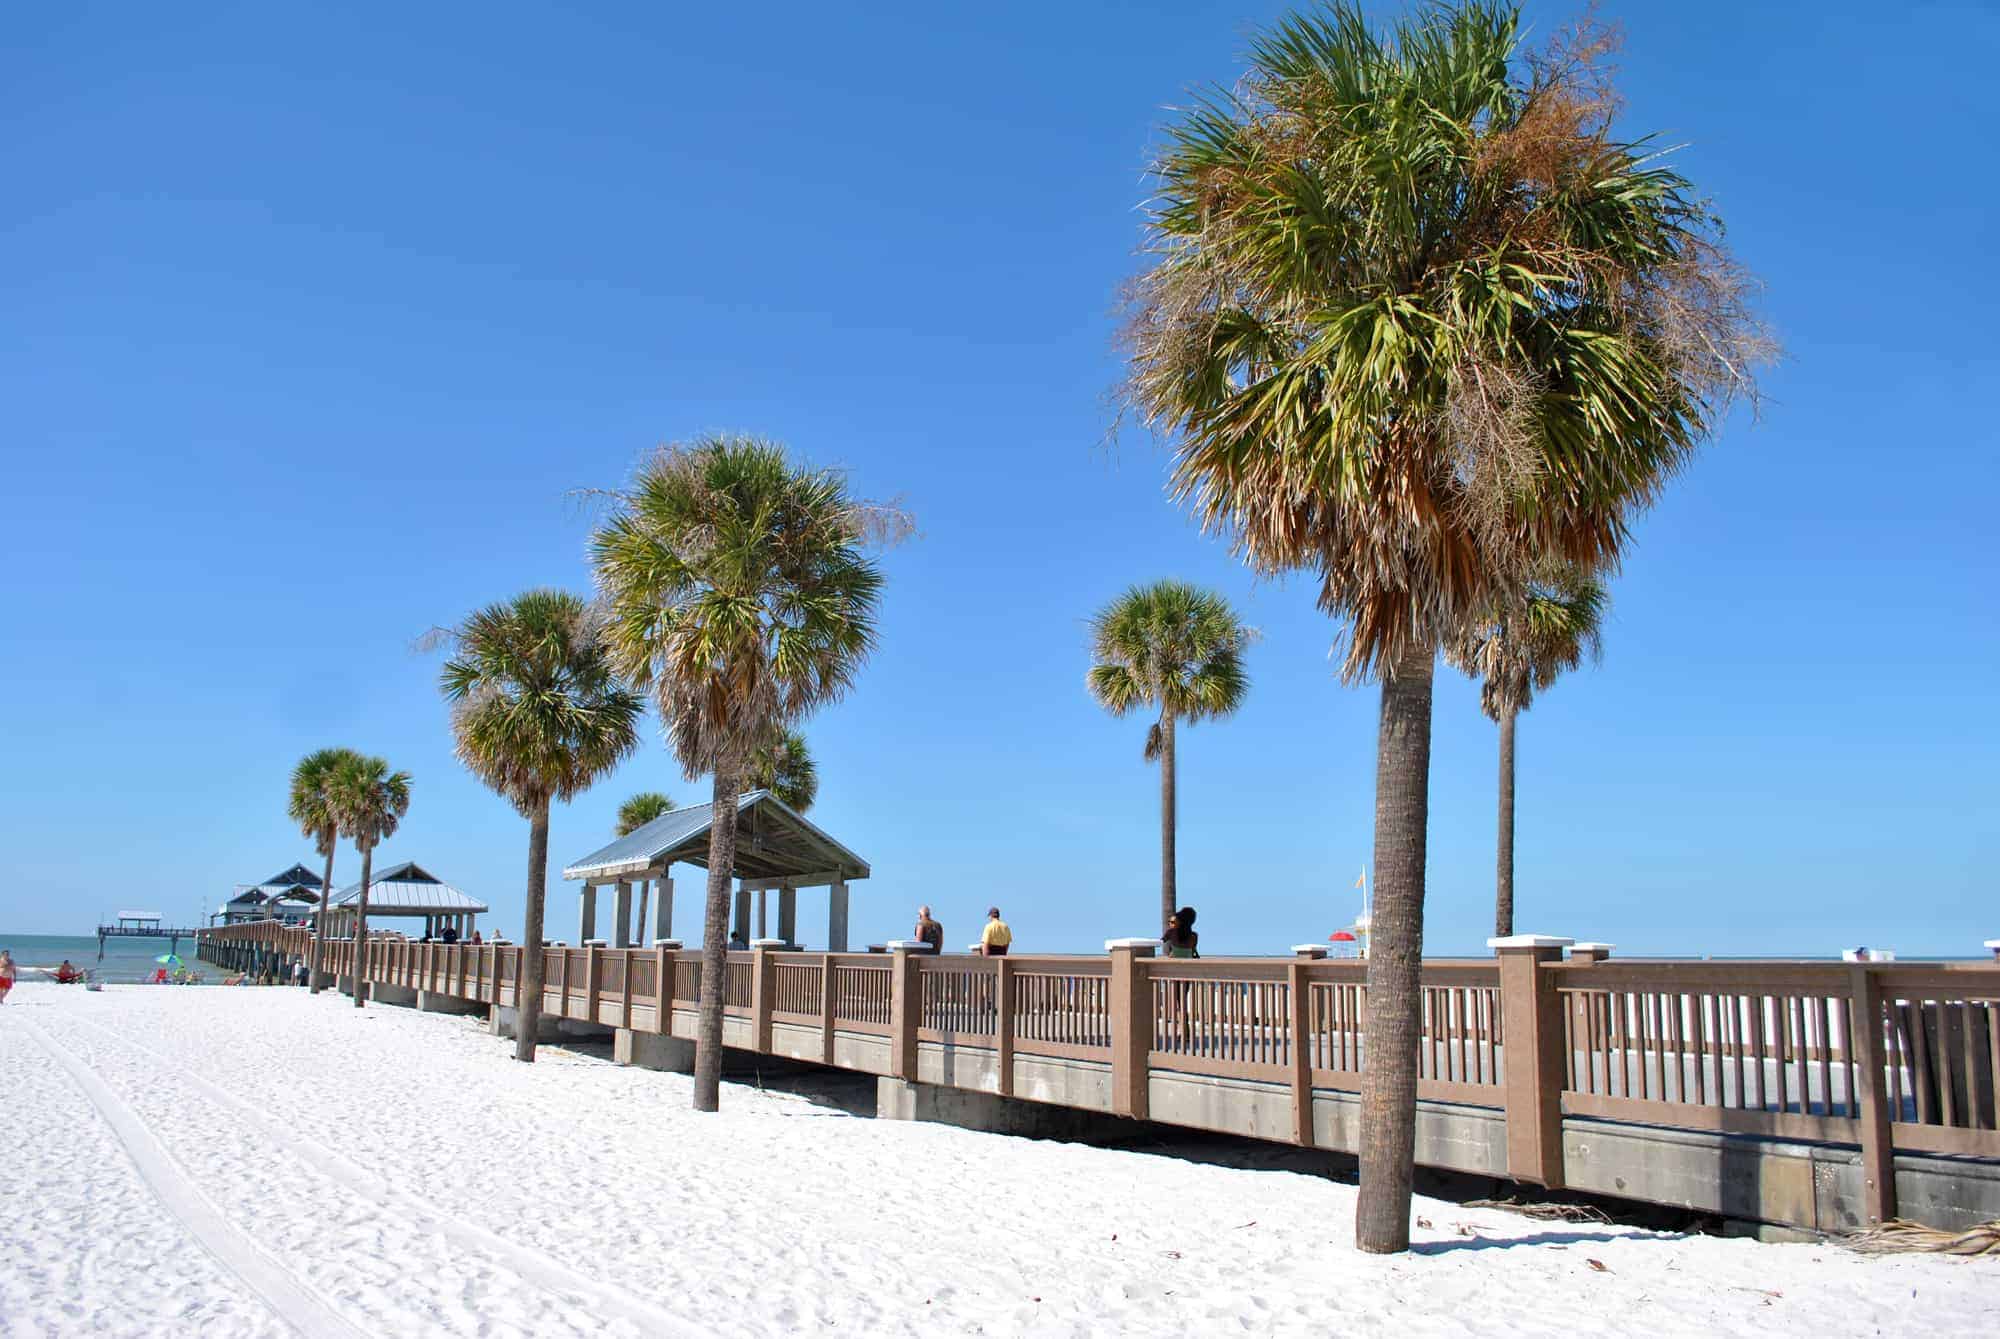 Palmtrees line a beach walkway